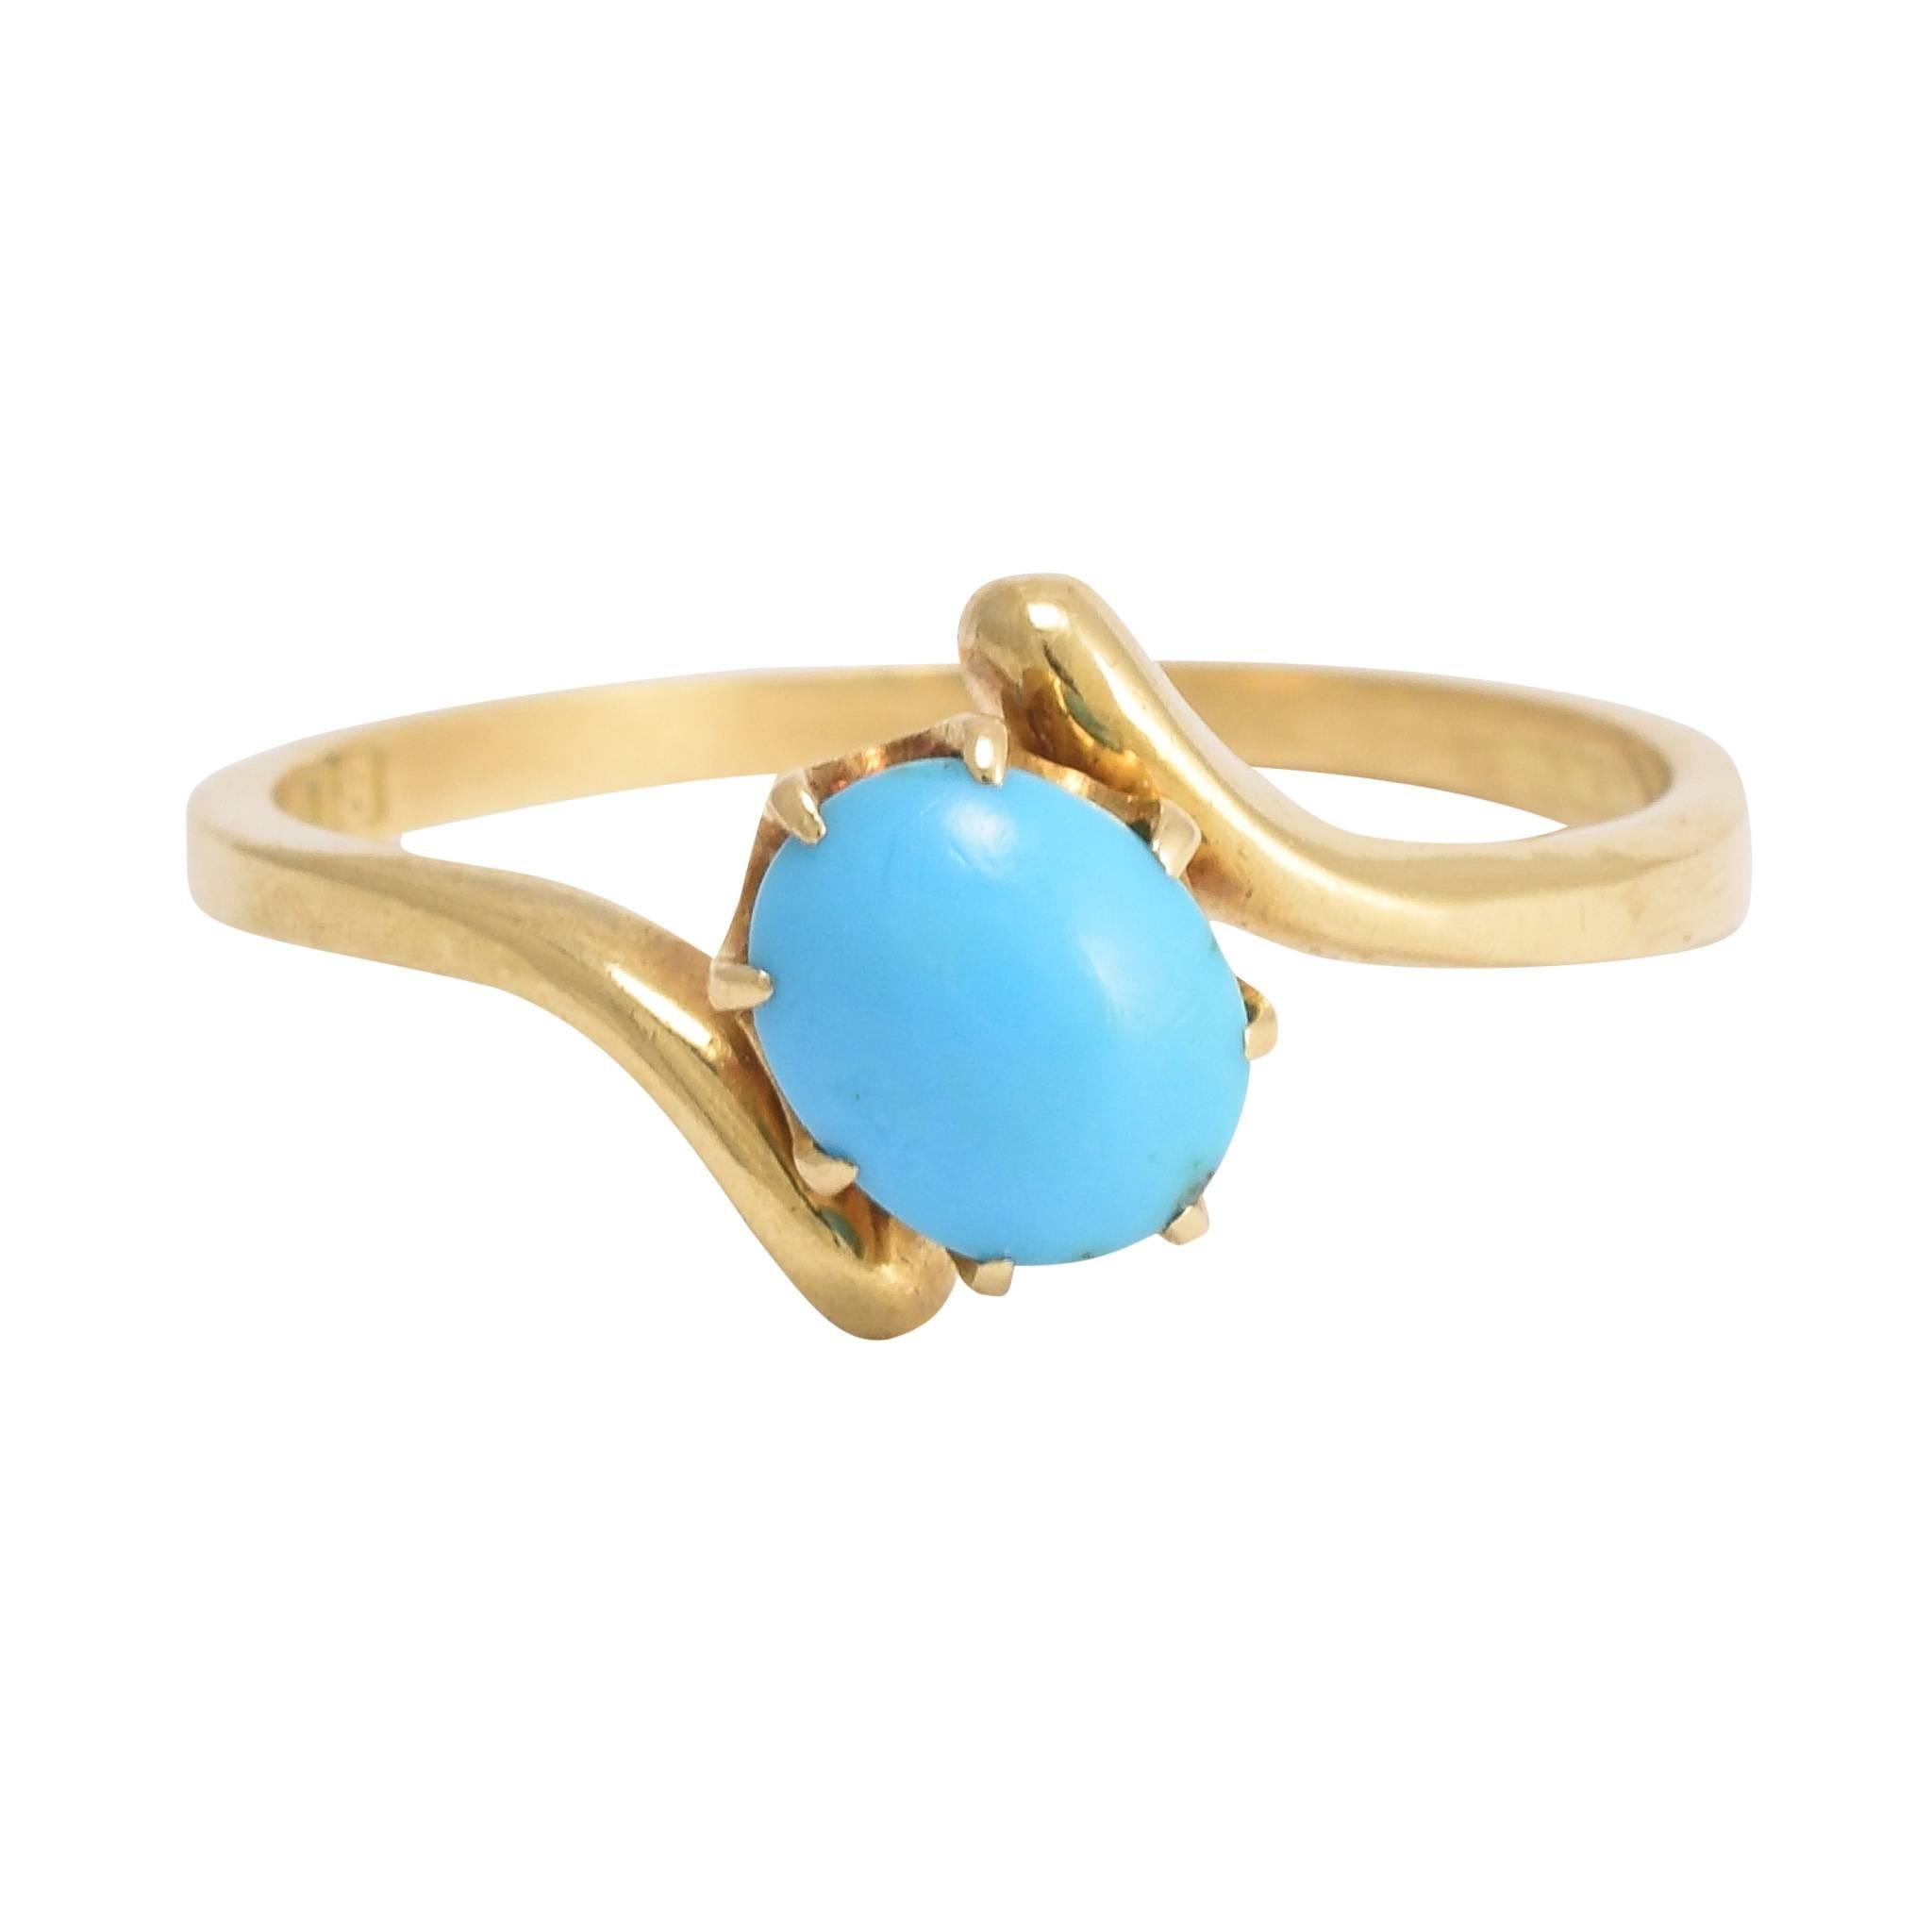 Antique Art Nouveau Turquoise Crossover Ring